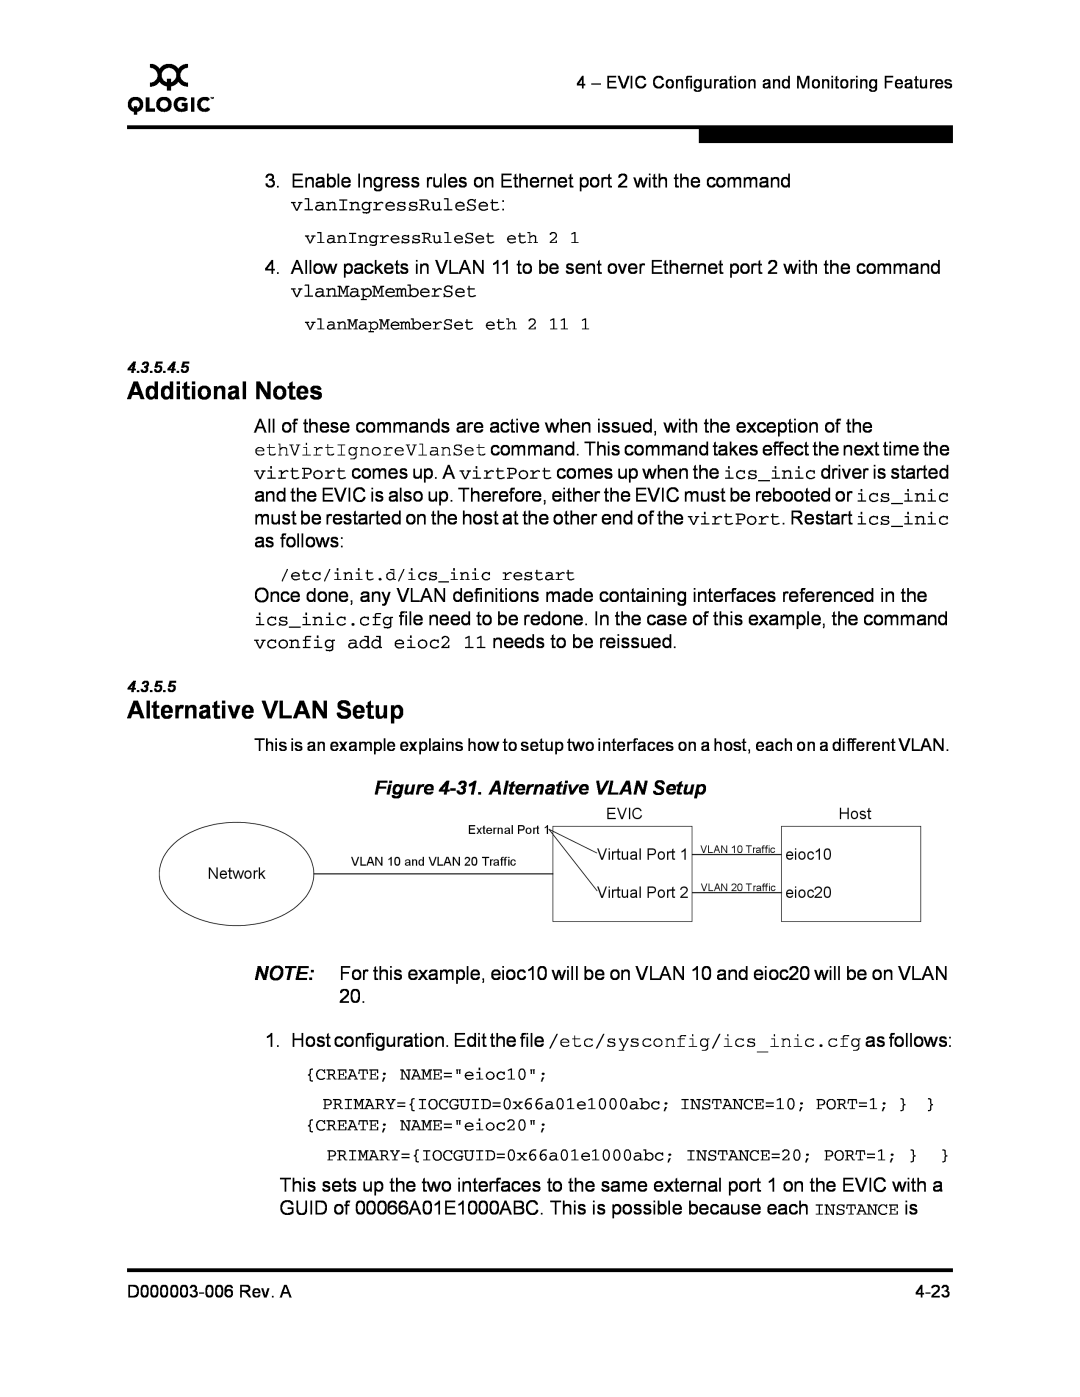 Q-Logic 9000 manual Additional Notes, 31. Alternative VLAN Setup 